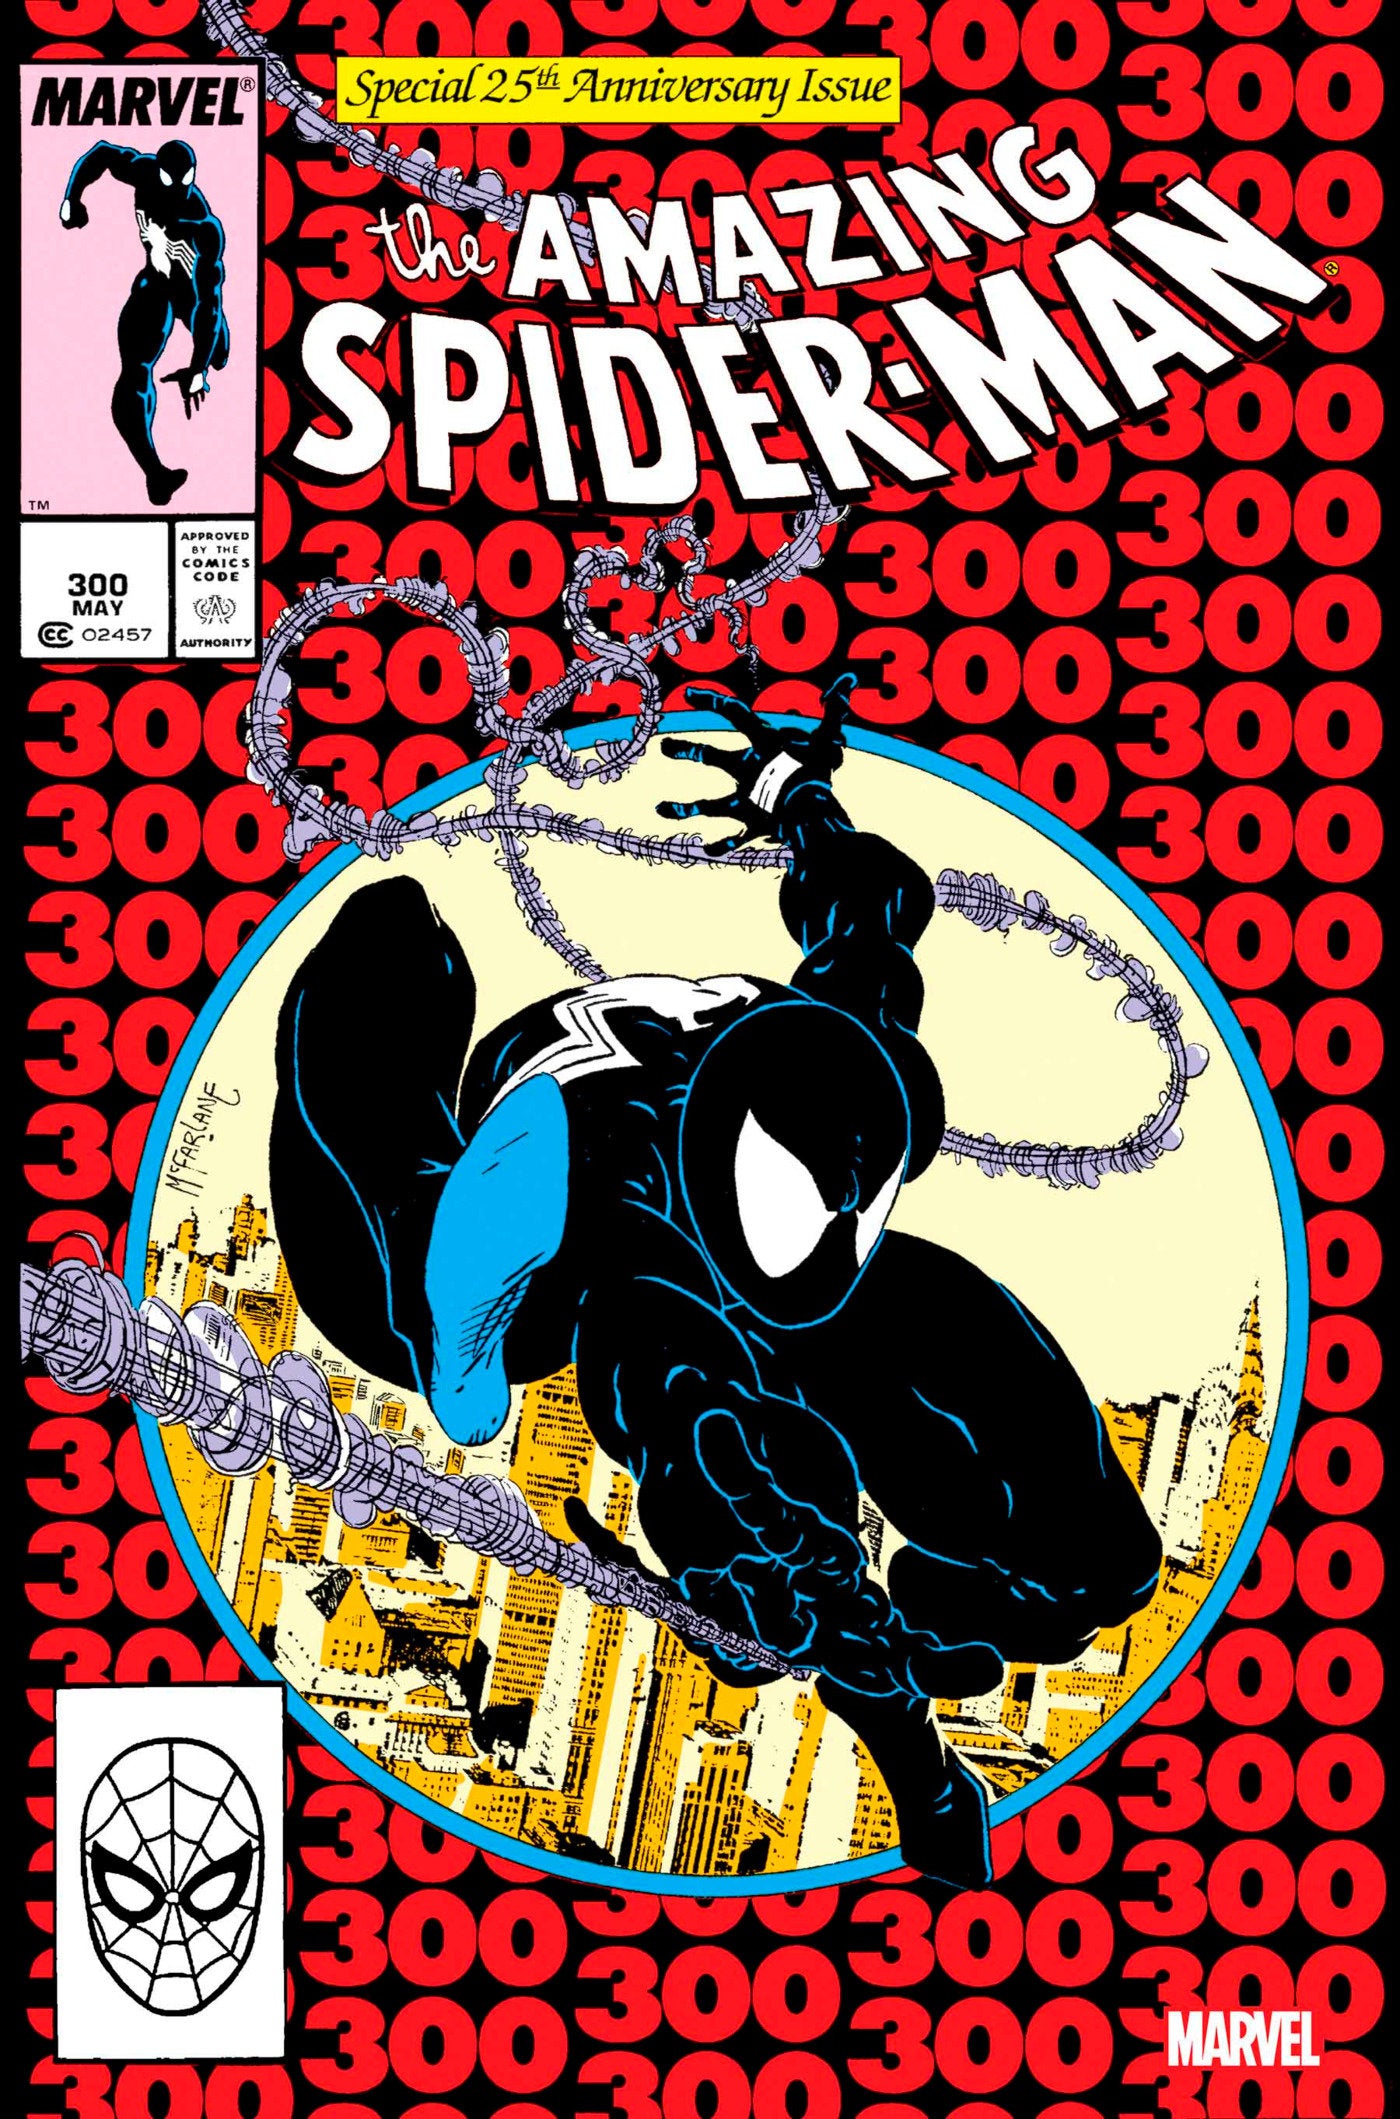 Amazing Spider-Man 300 Facsimile Edition | L.A. Mood Comics and Games